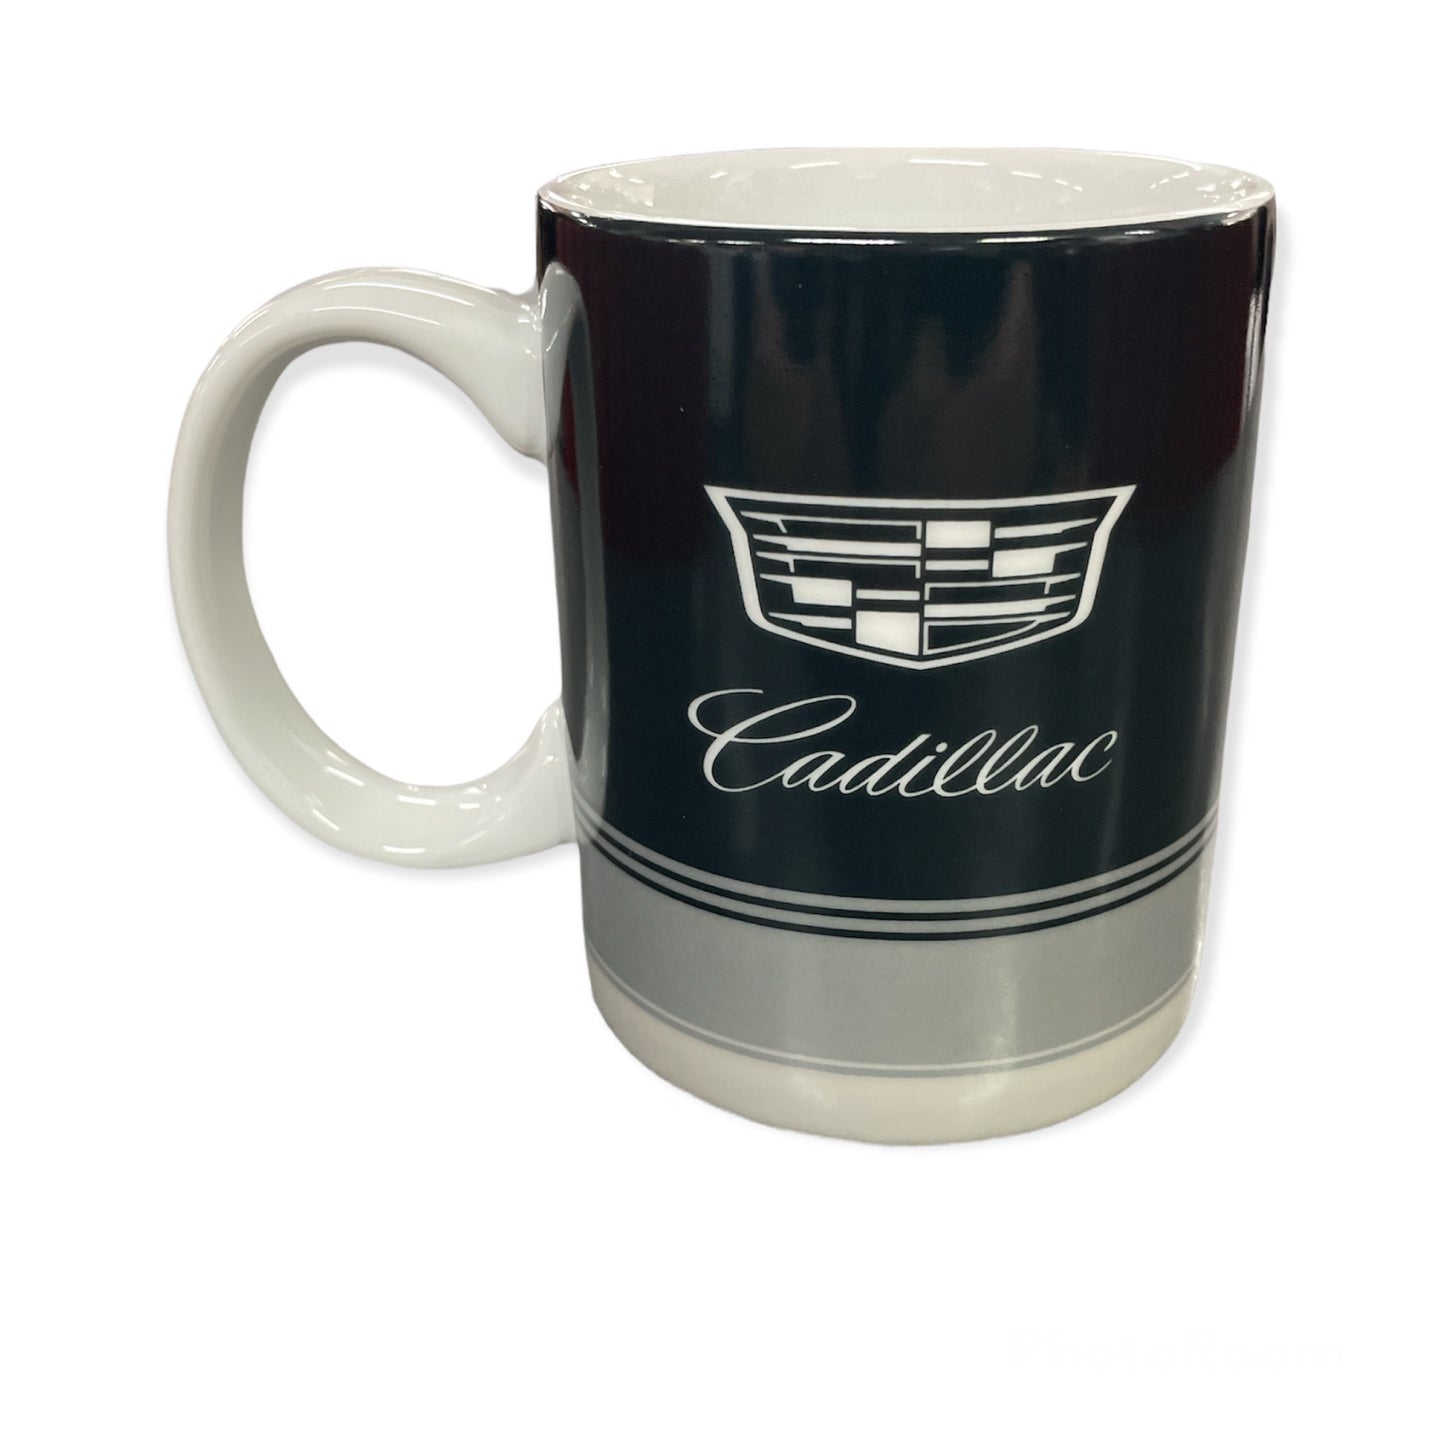 Cadillac Kaffeetasse Tasse Mug mit Cadillac Pinstripe Motiv Schwarz/Grau